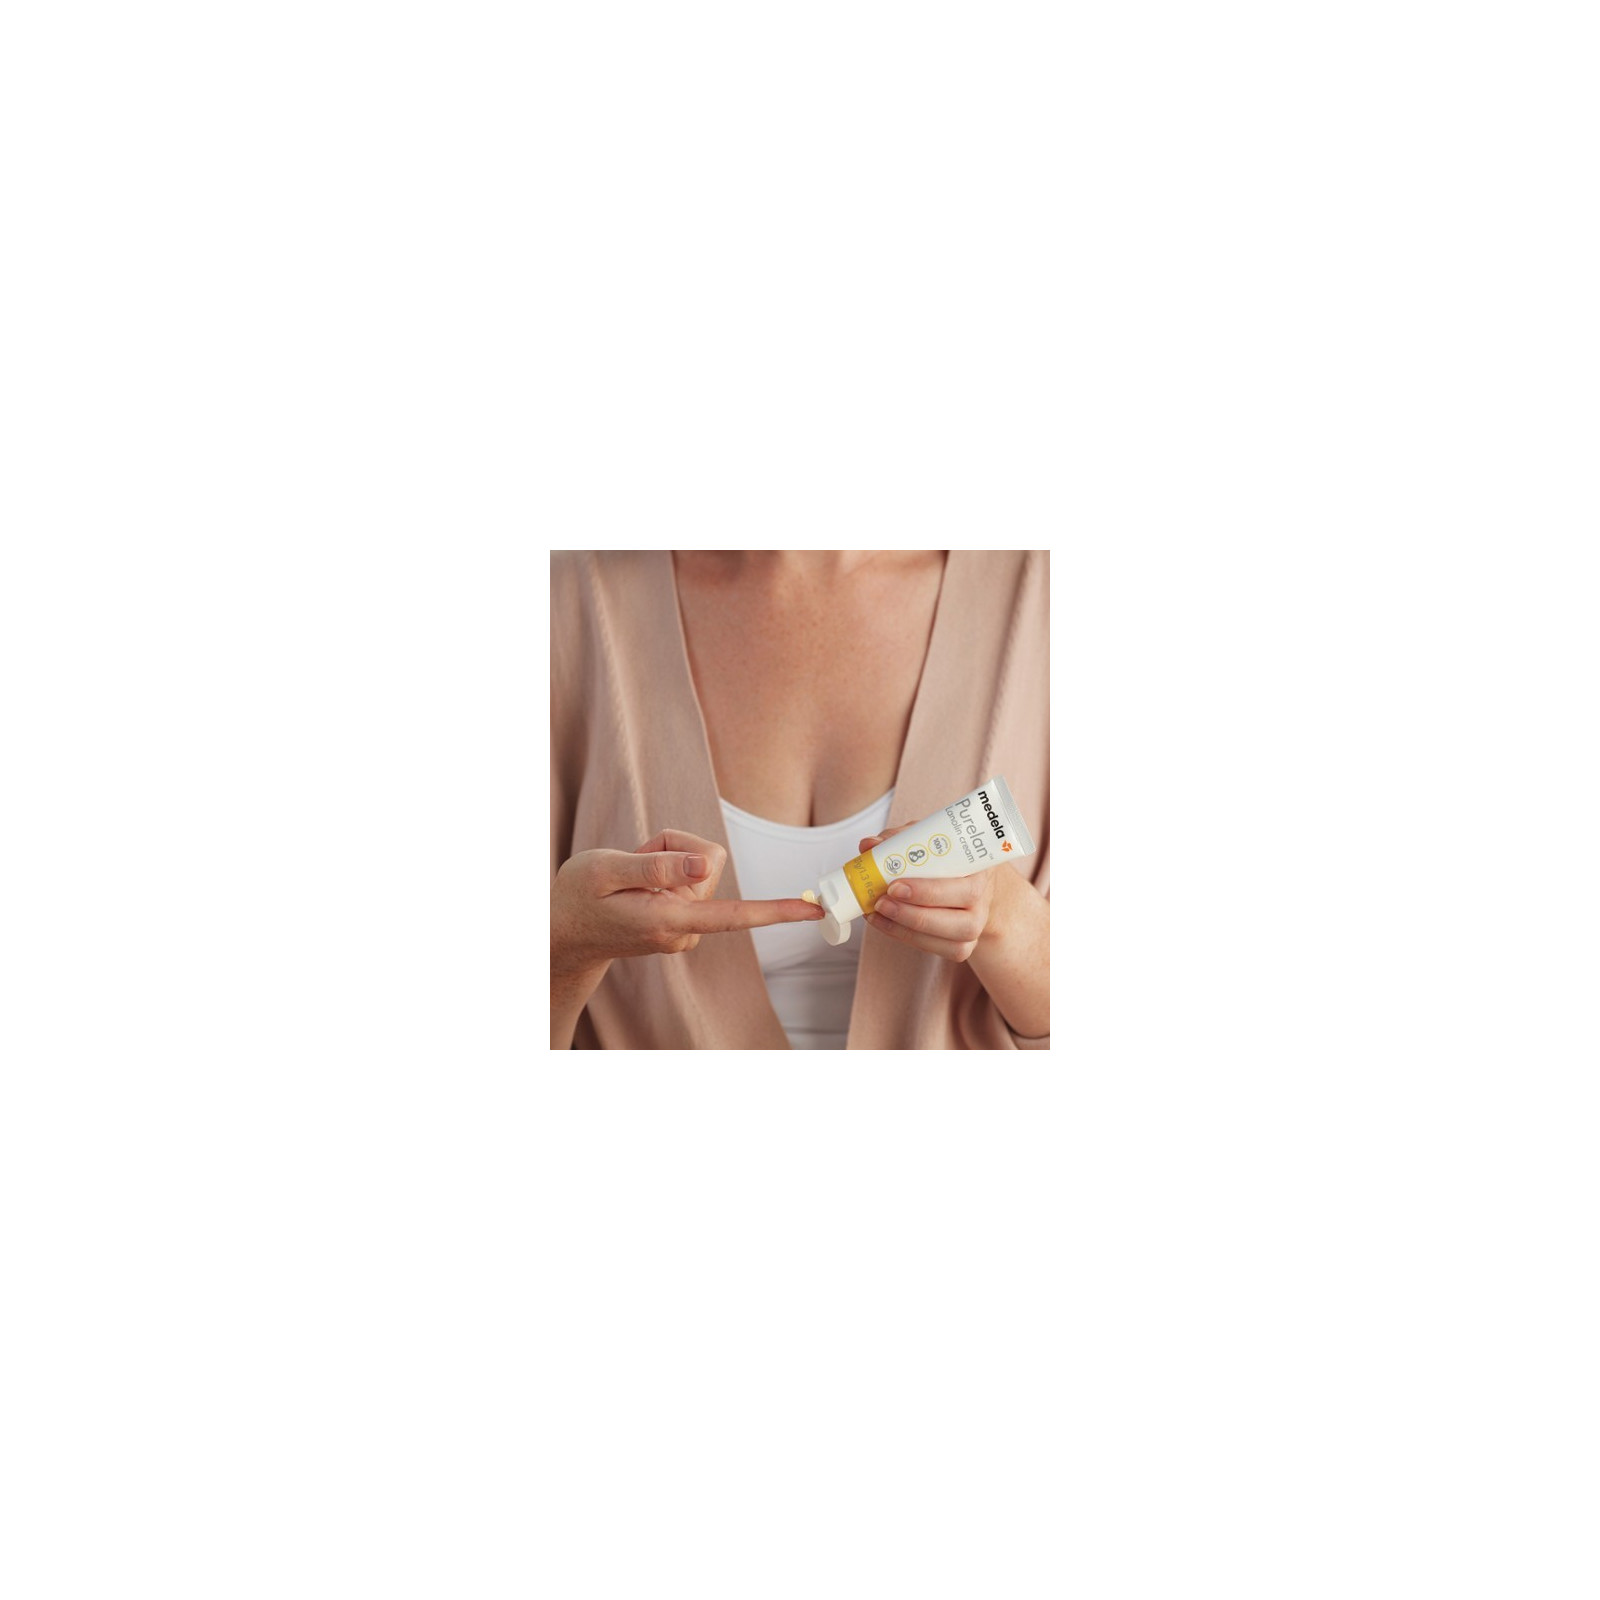 Medela Purelan Lanolin Cream 7g  Nipple Care, Breastfeeding Essential -  Alpro Pharmacy